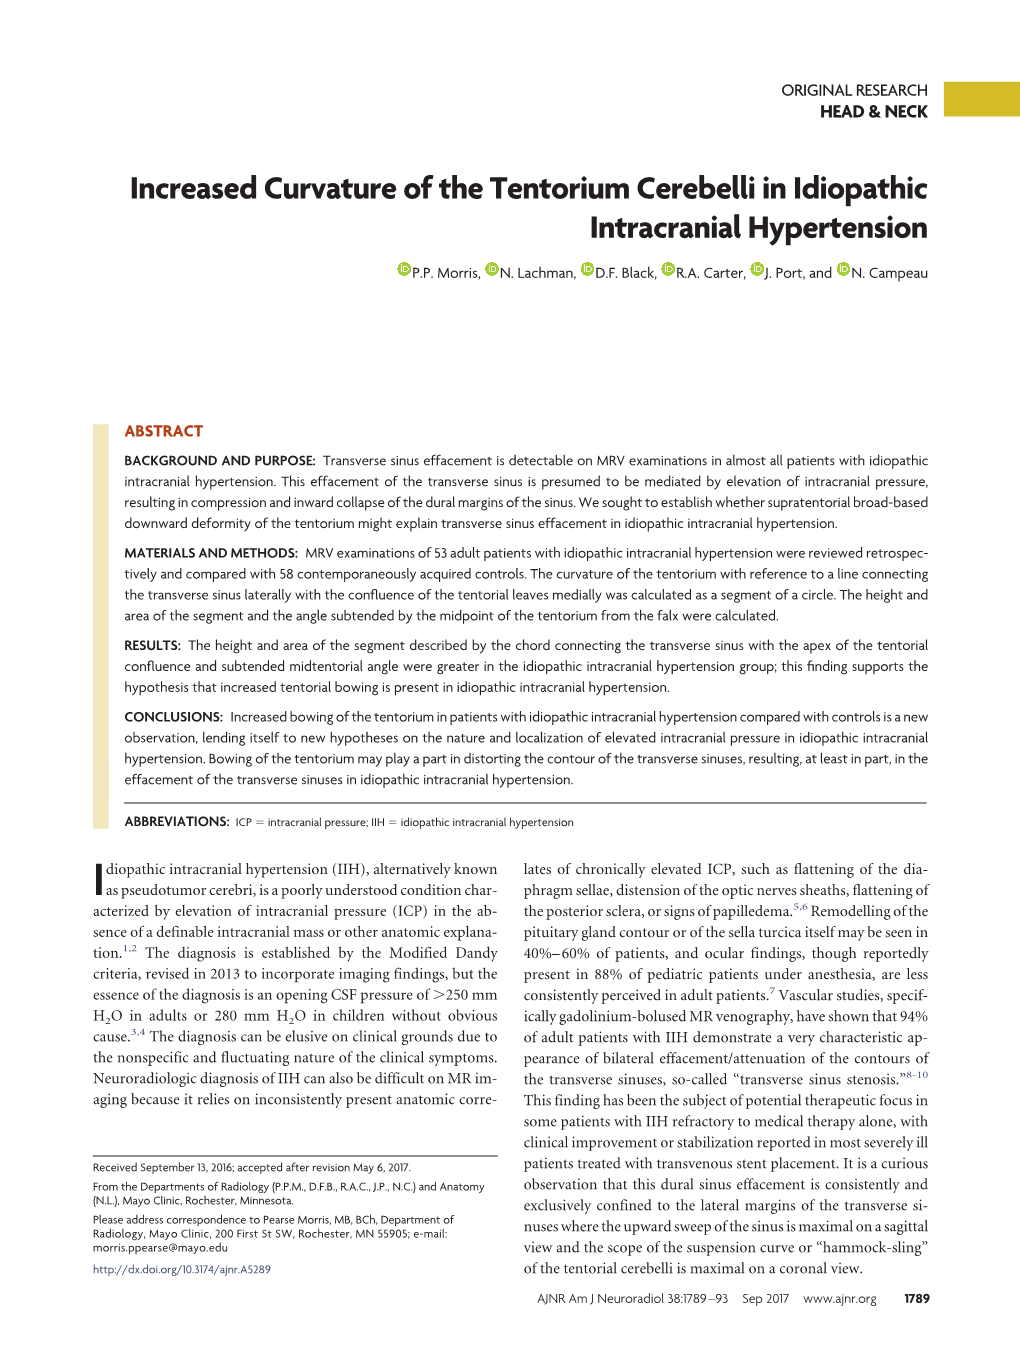 Increased Curvature of the Tentorium Cerebelli in Idiopathic Intracranial Hypertension